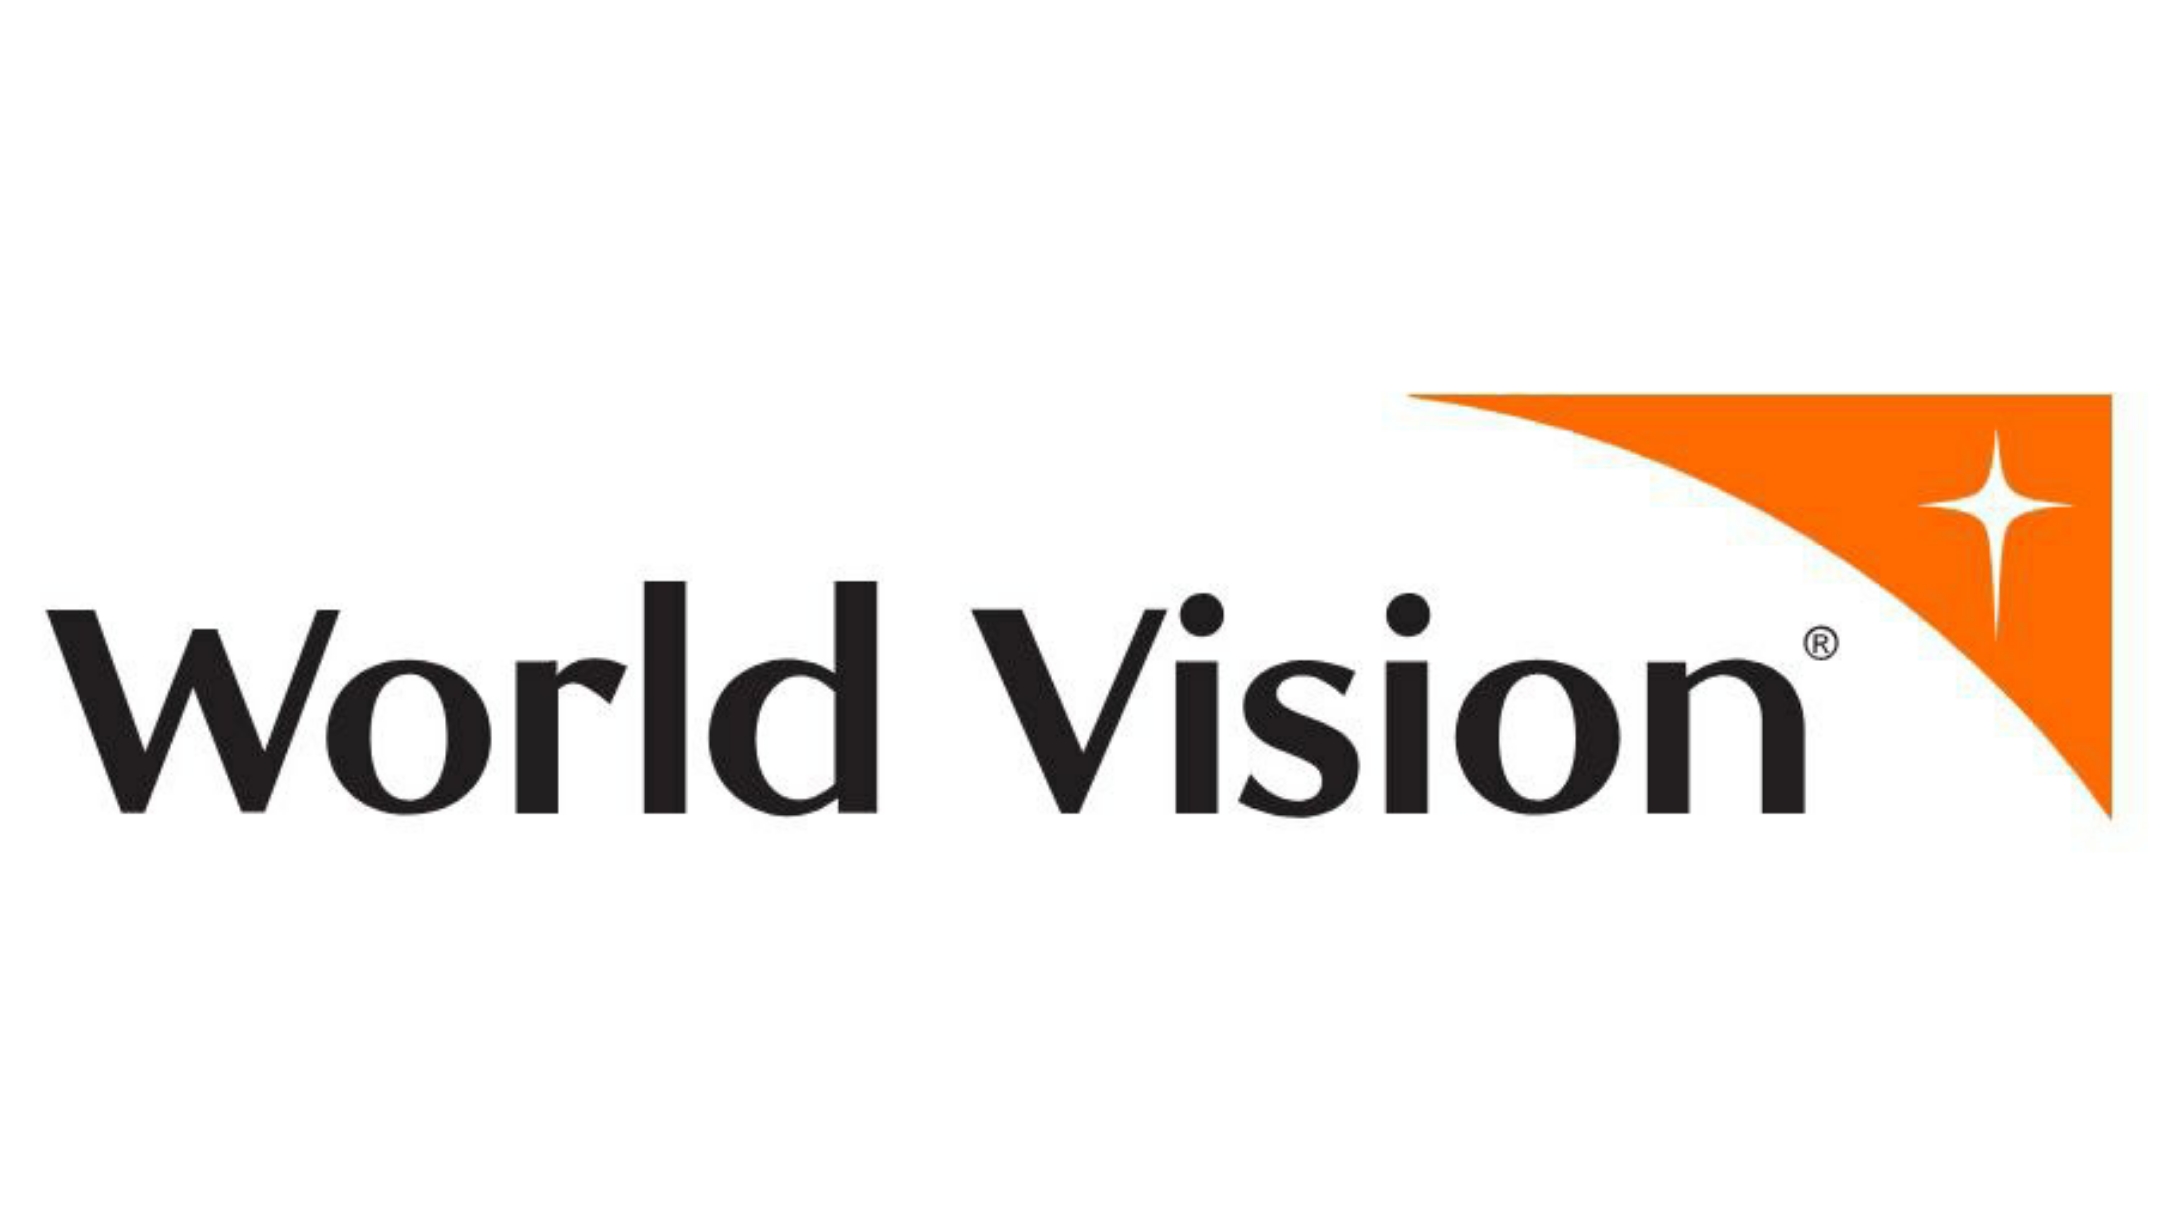 World vision Image